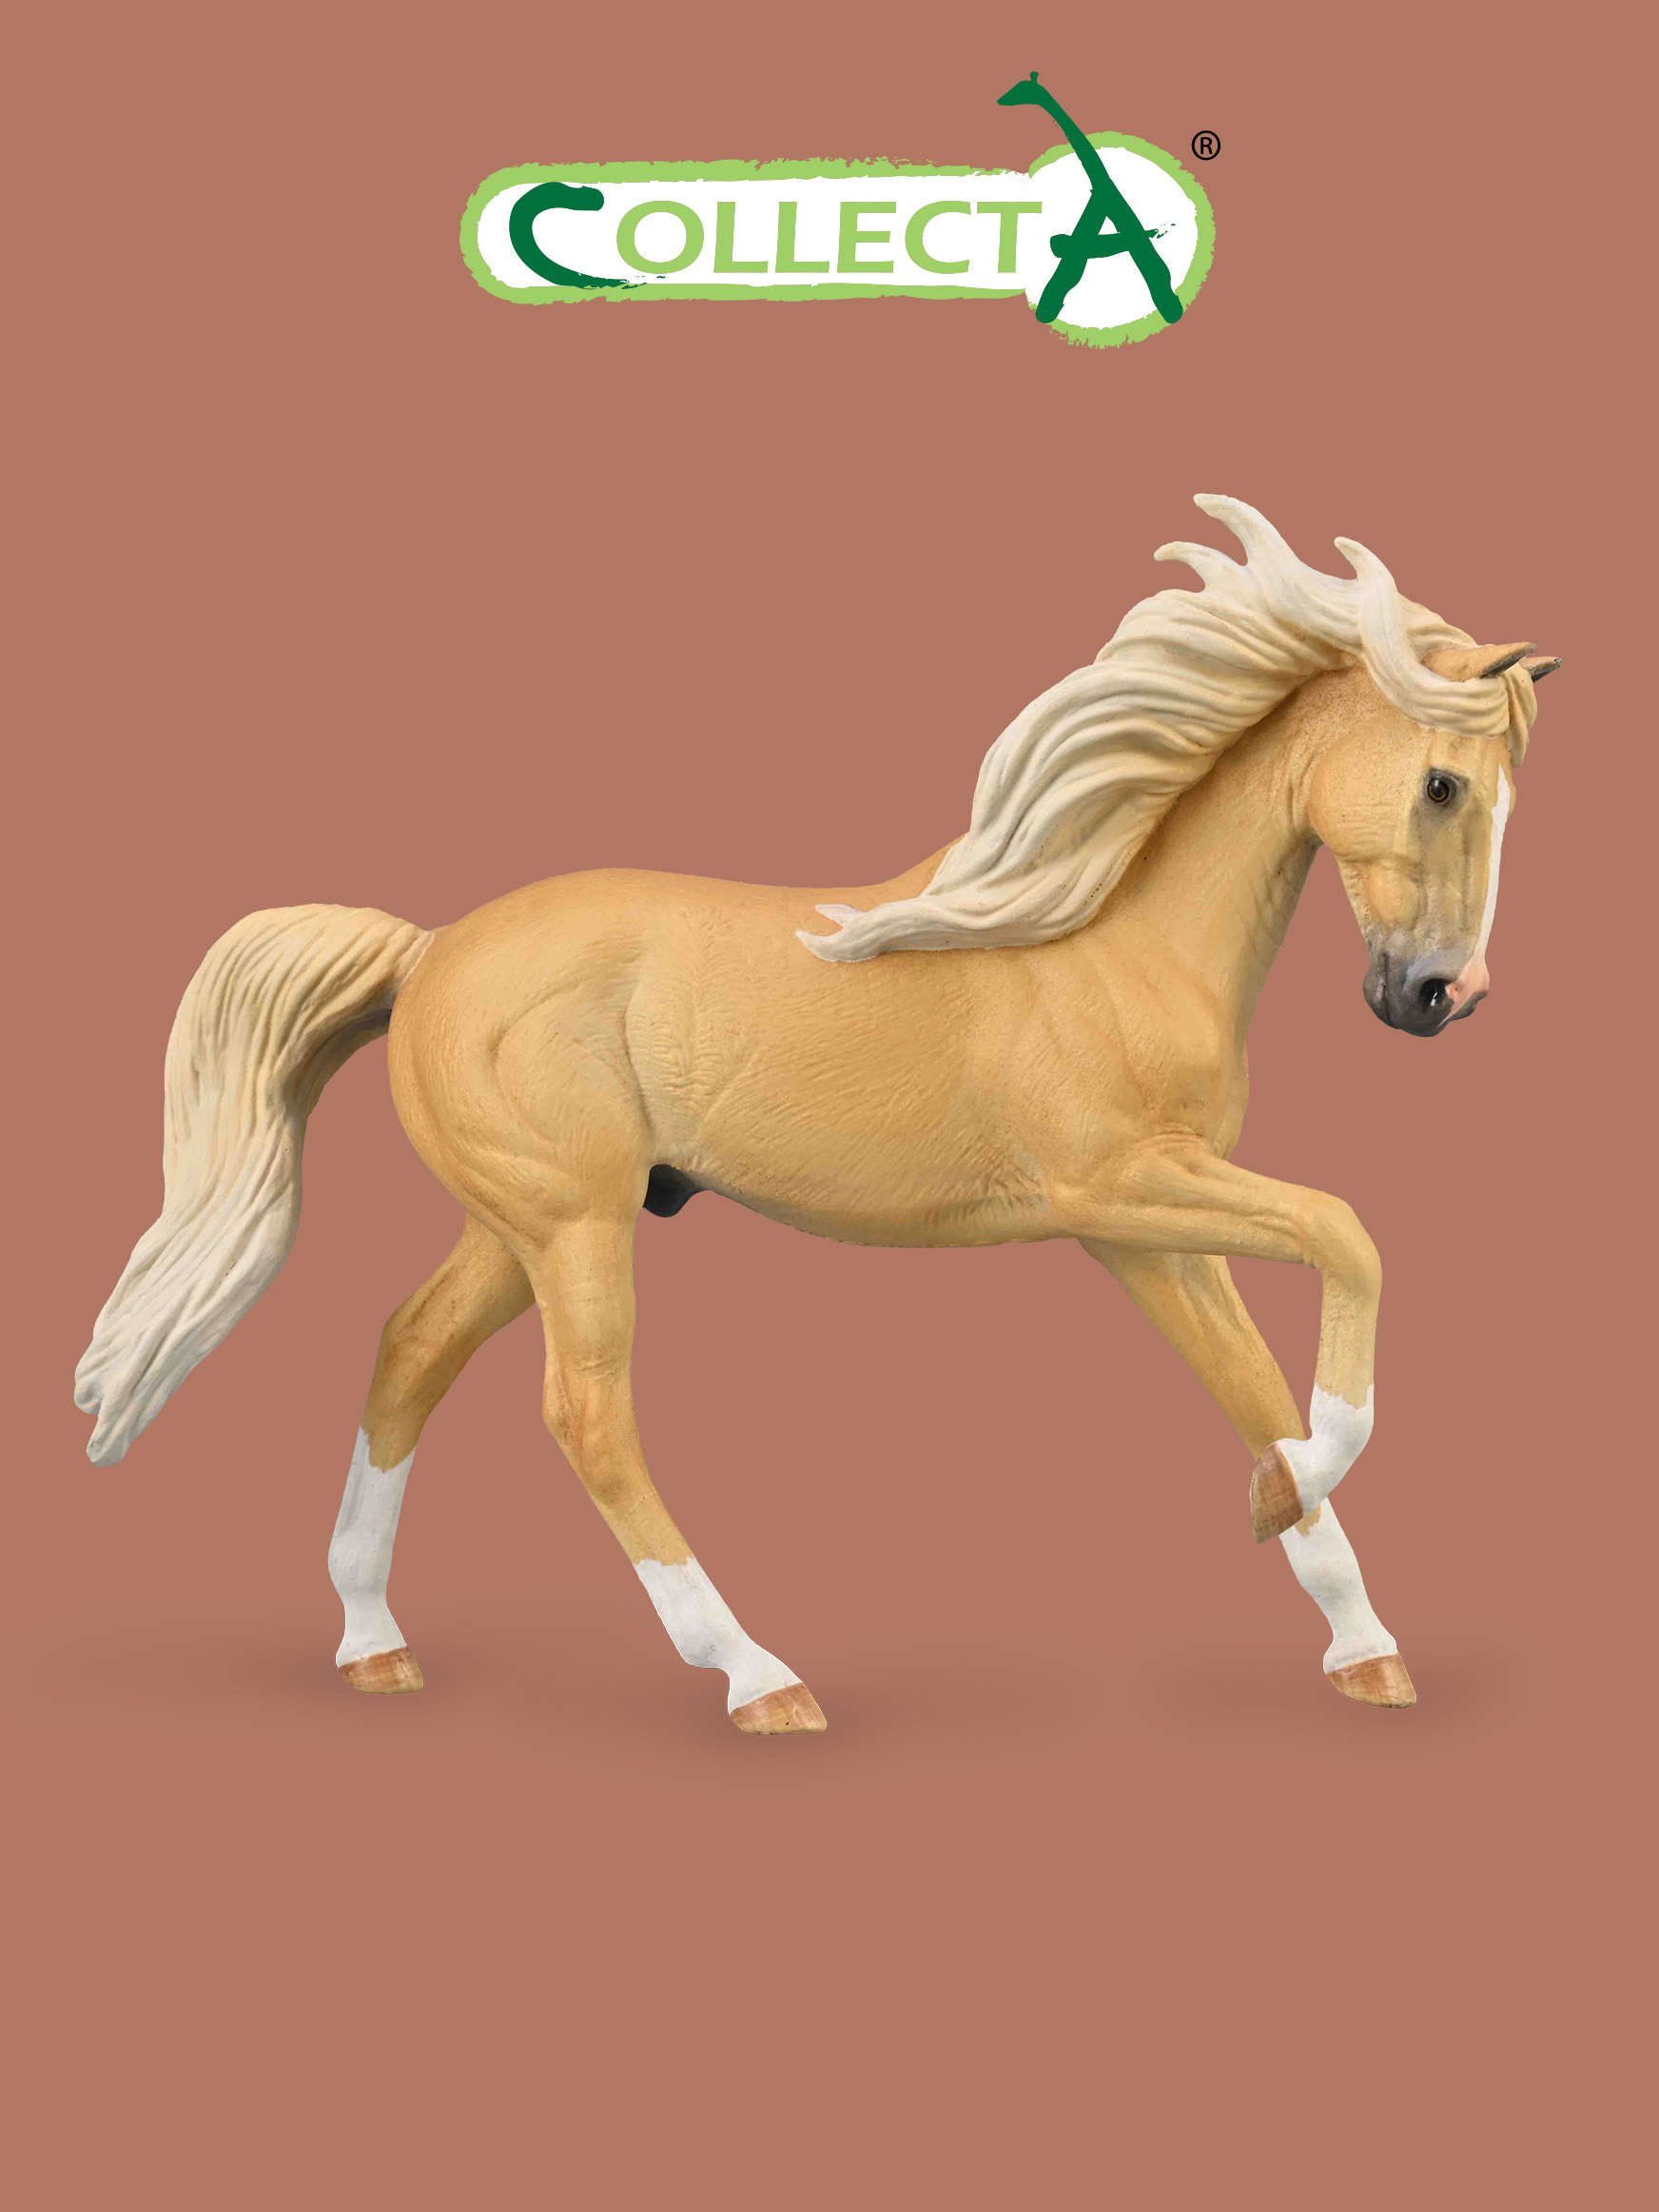 Фигурка Collecta животного Лошадь Андалузский жеребец - Паломино